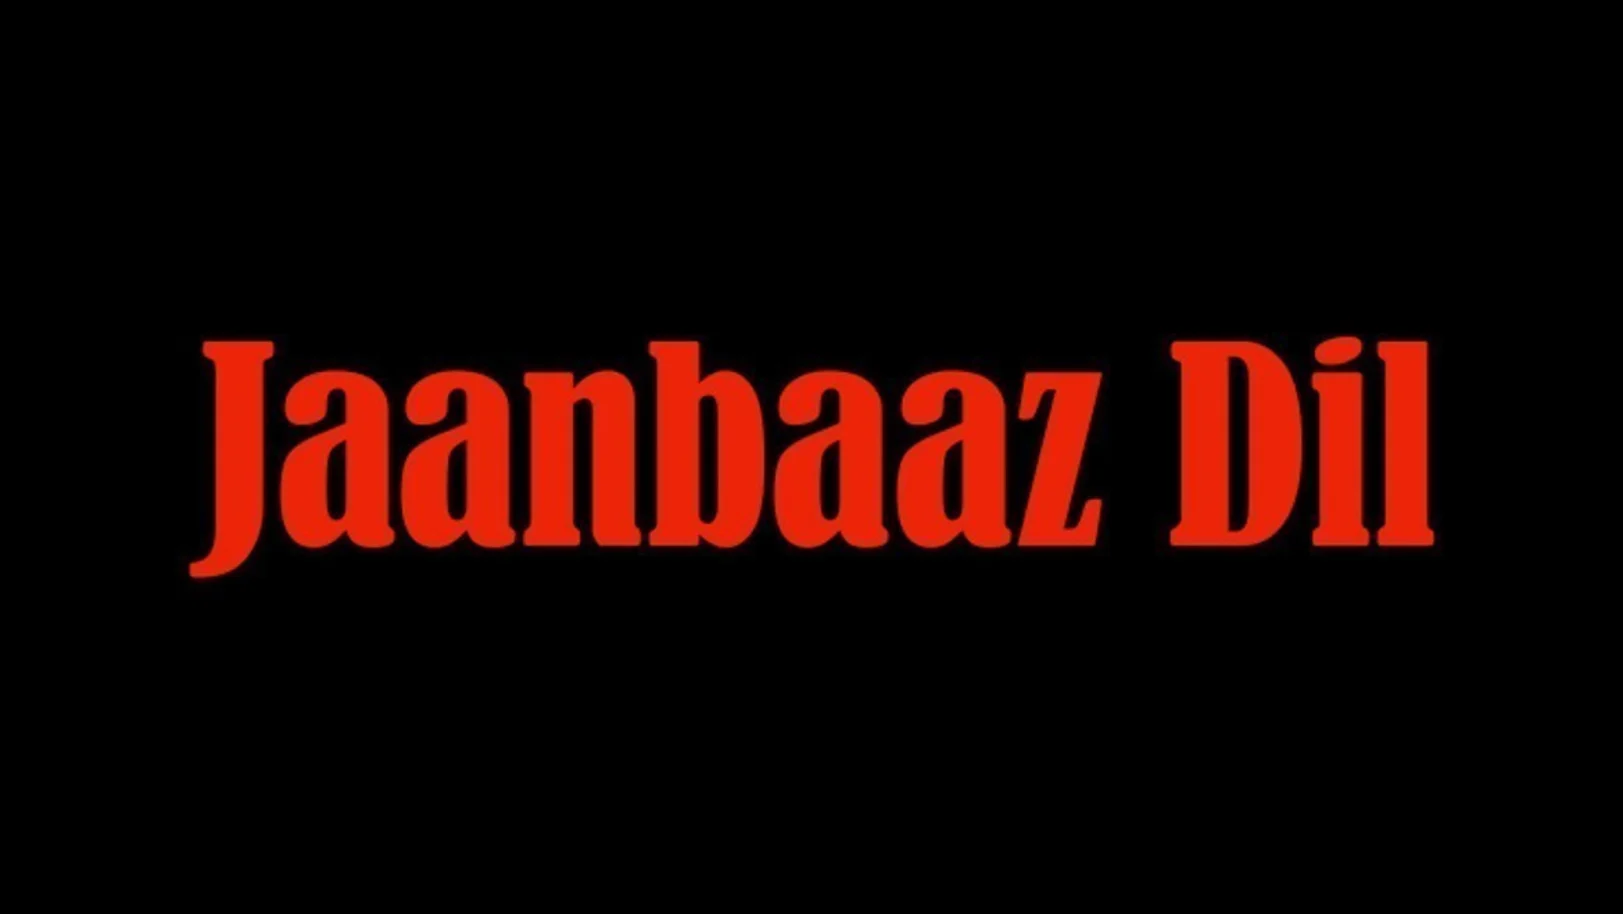 Jaanbaaz Dil Movie